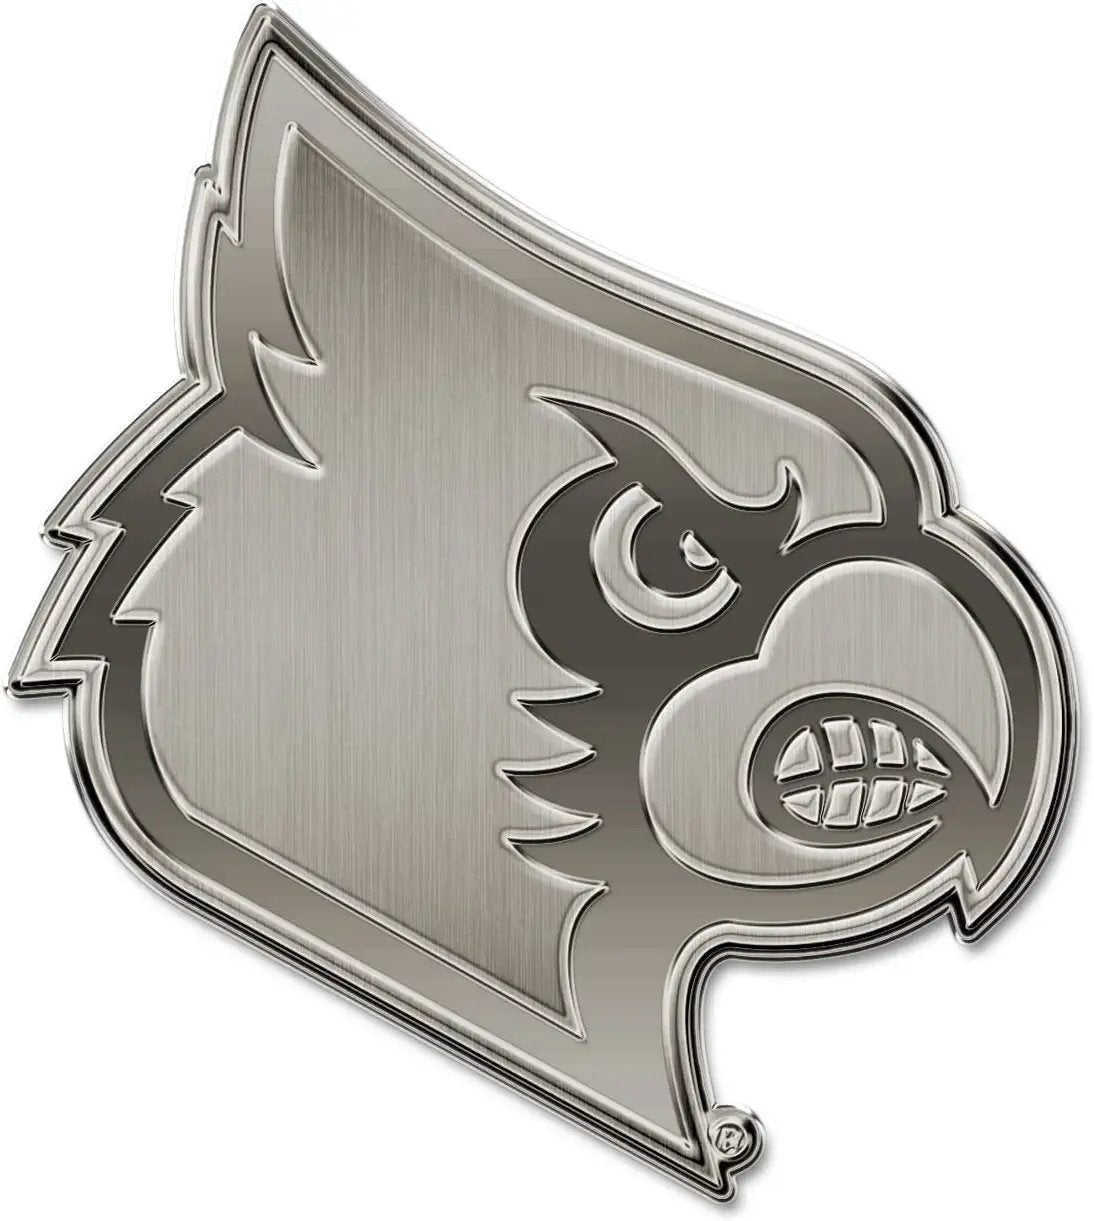 University of Louisville Cardinals Premium Solid Metal Raised Auto Emblem, Antique Nickel Finish, Shape Cut, Adhesive Backing